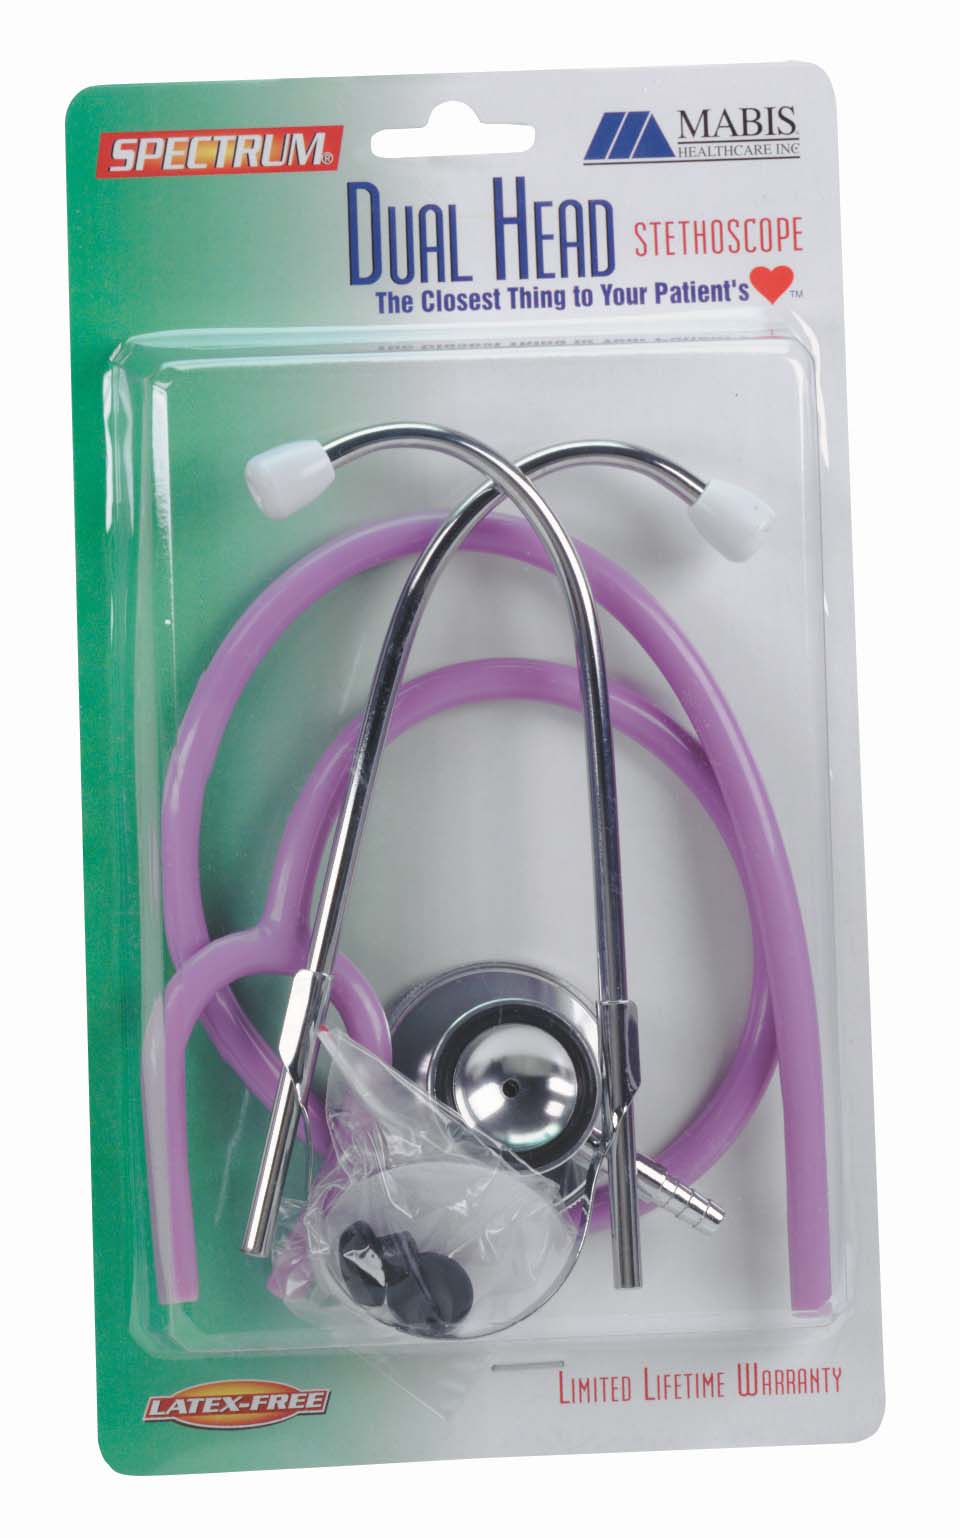 spectrum-dual-head-stethoscope-adult-slider-pack-lavender-10-429-110-lr.jpg